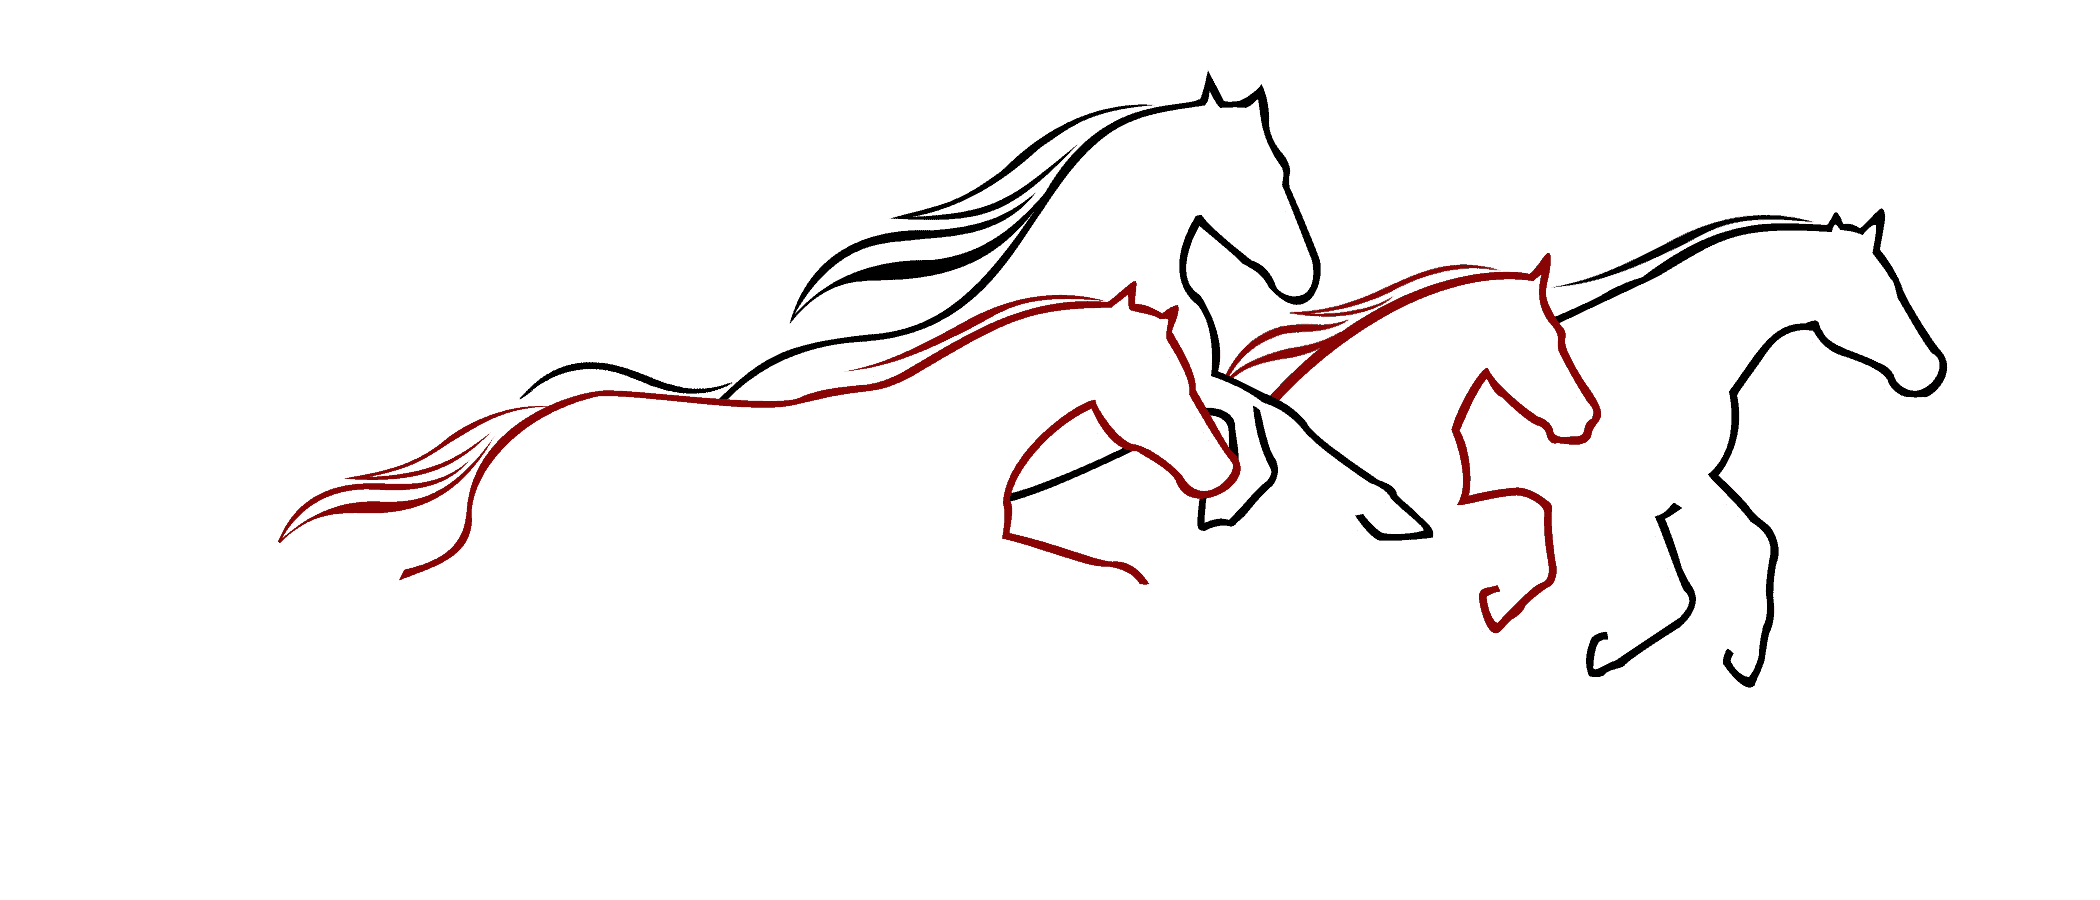 4 Horse